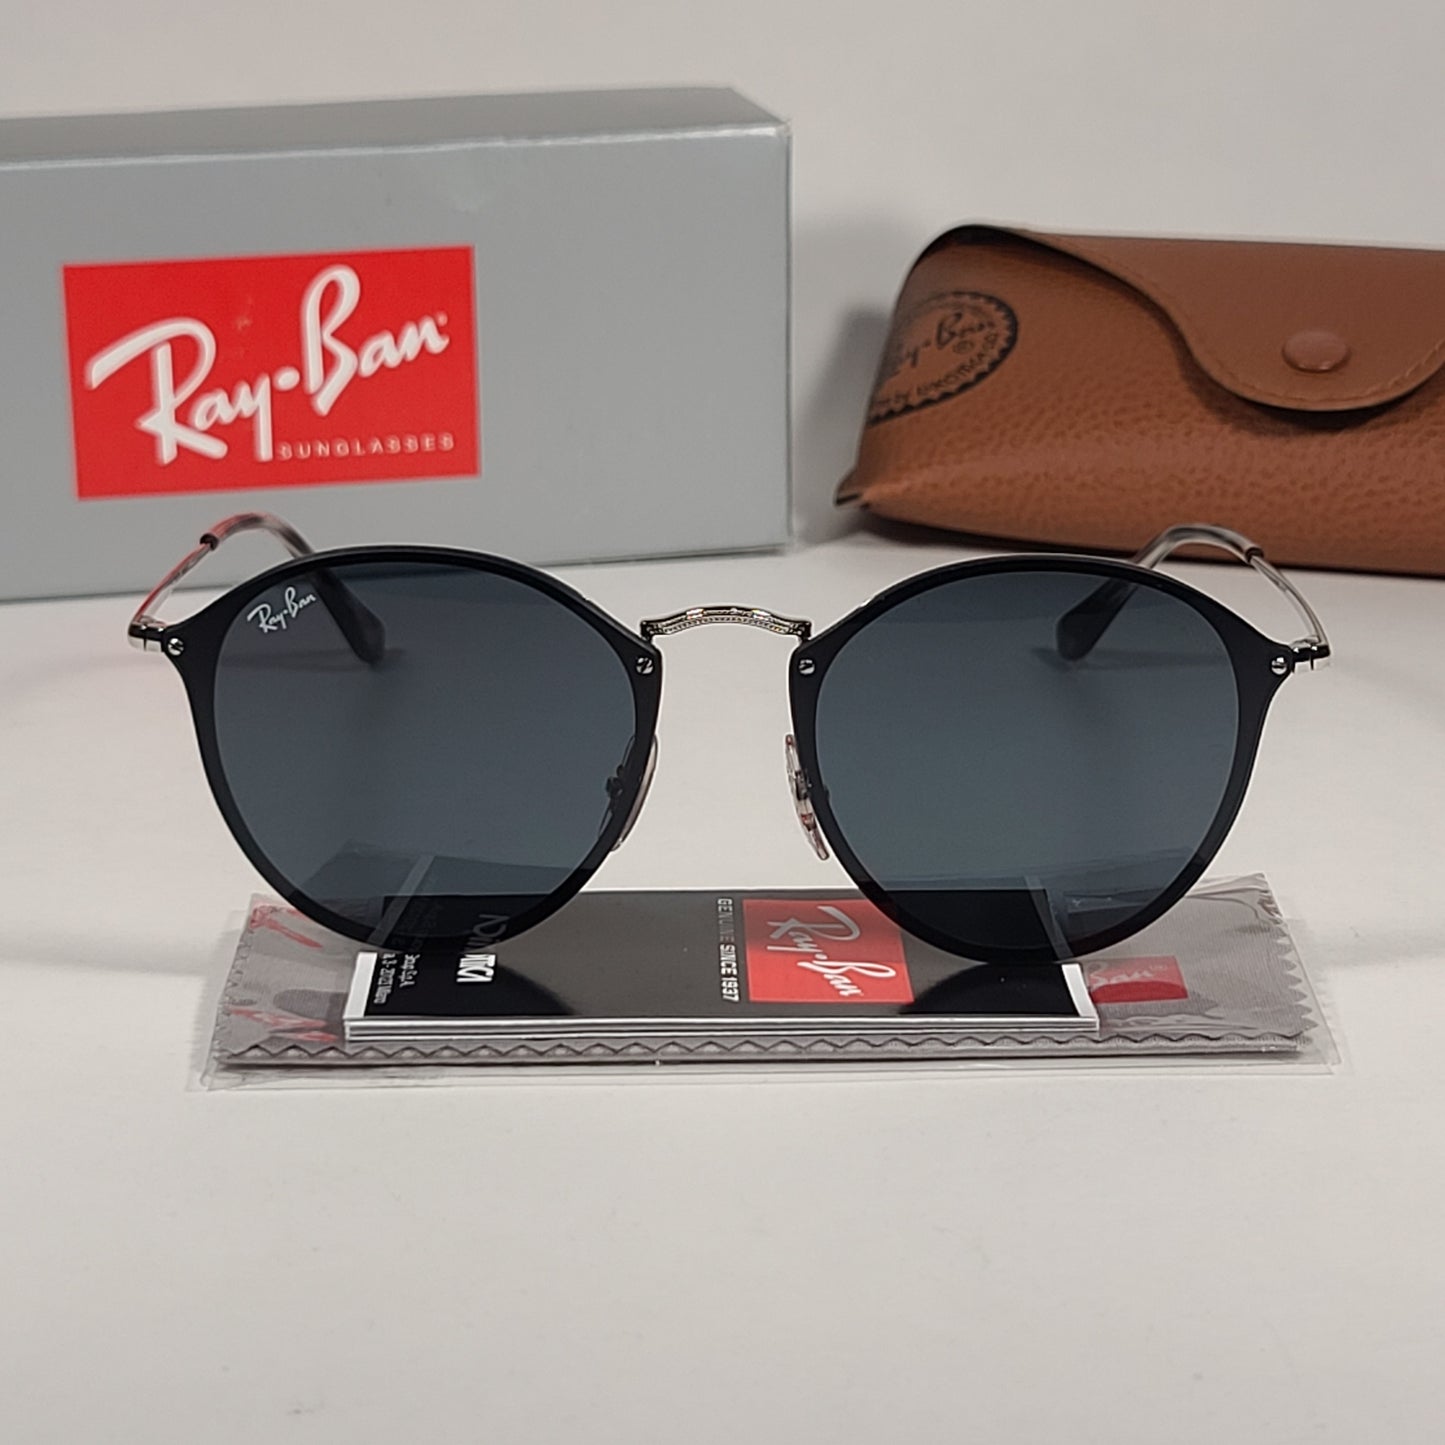 Ray-Ban Blaze Round Sunglasses Black Silver Metal Frame Gray Lens RB3574N 003/87 - Sunglasses